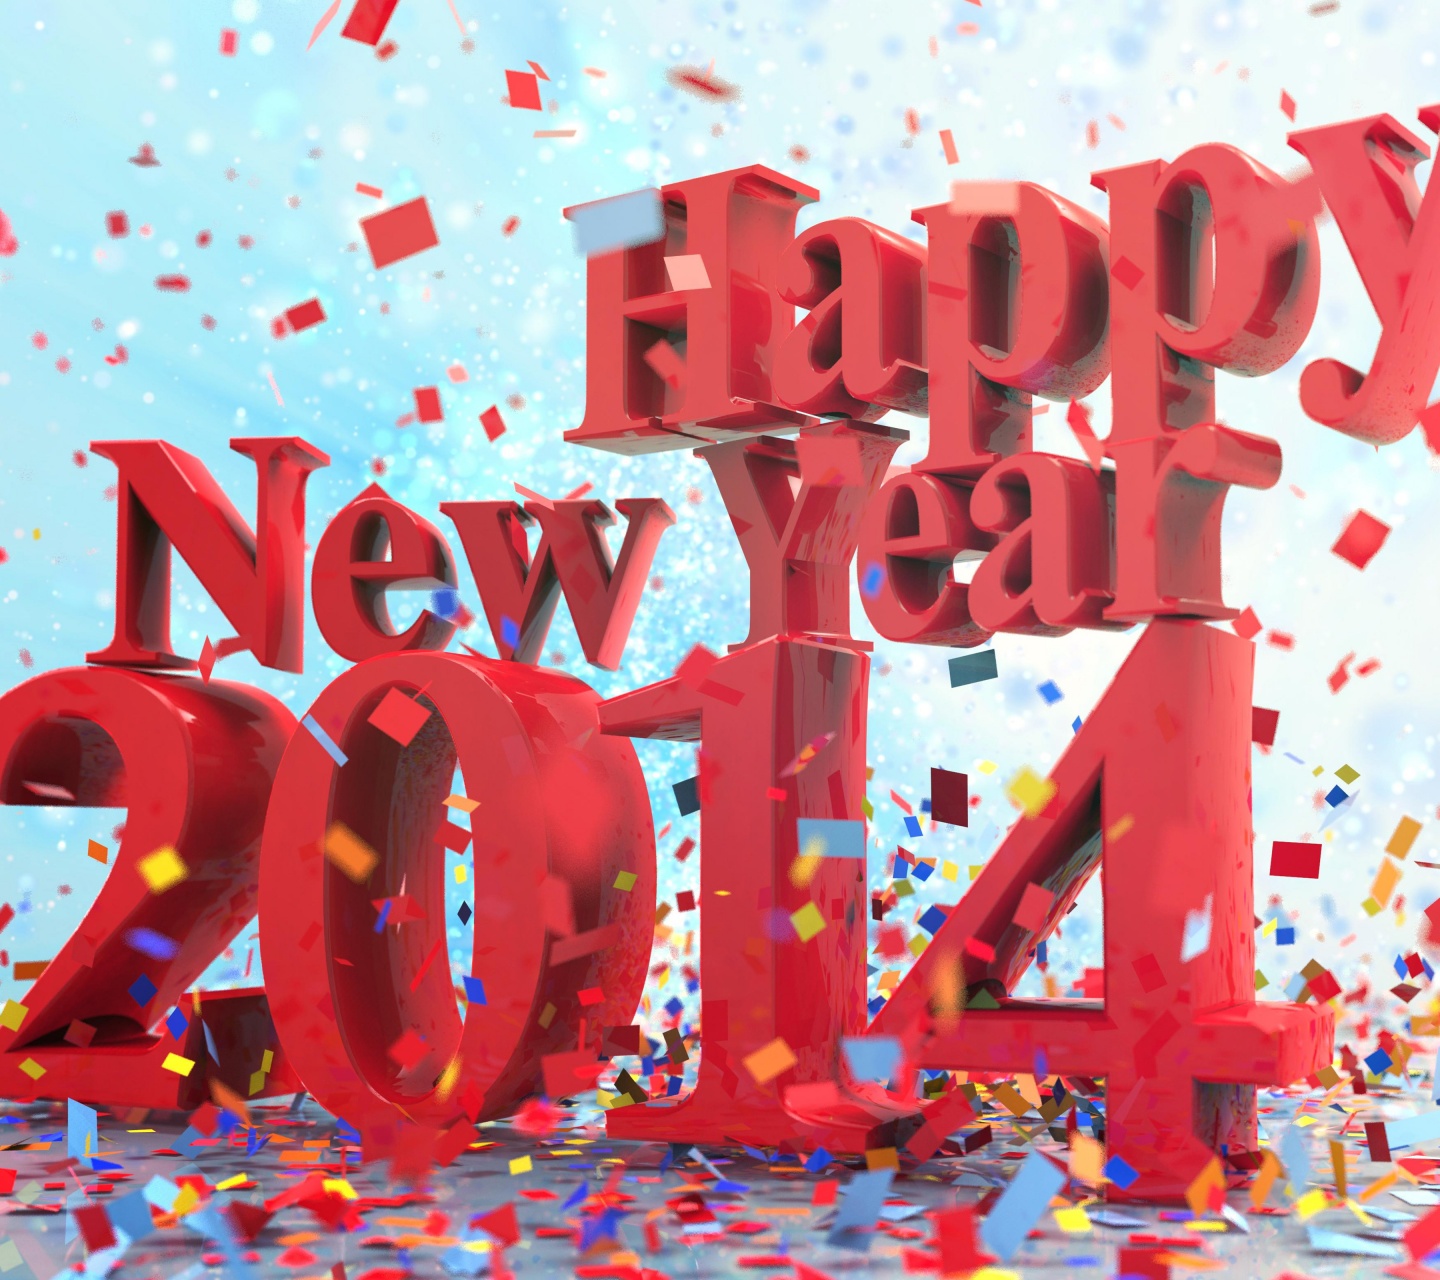 Happy New Year 2014 Celebration